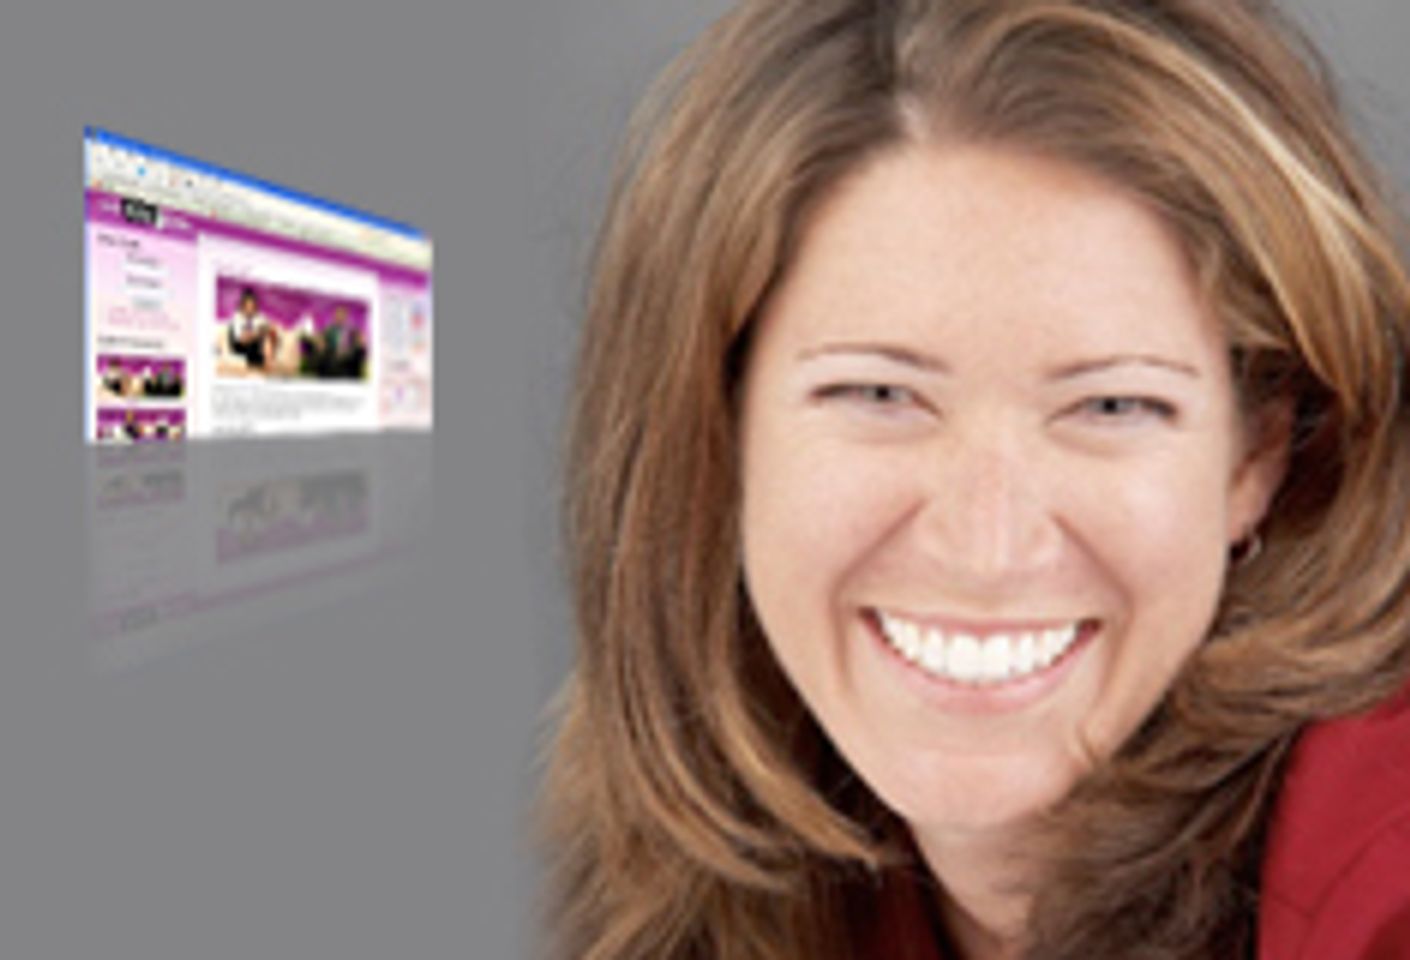 Dr. Jenn Launches Interactive Website